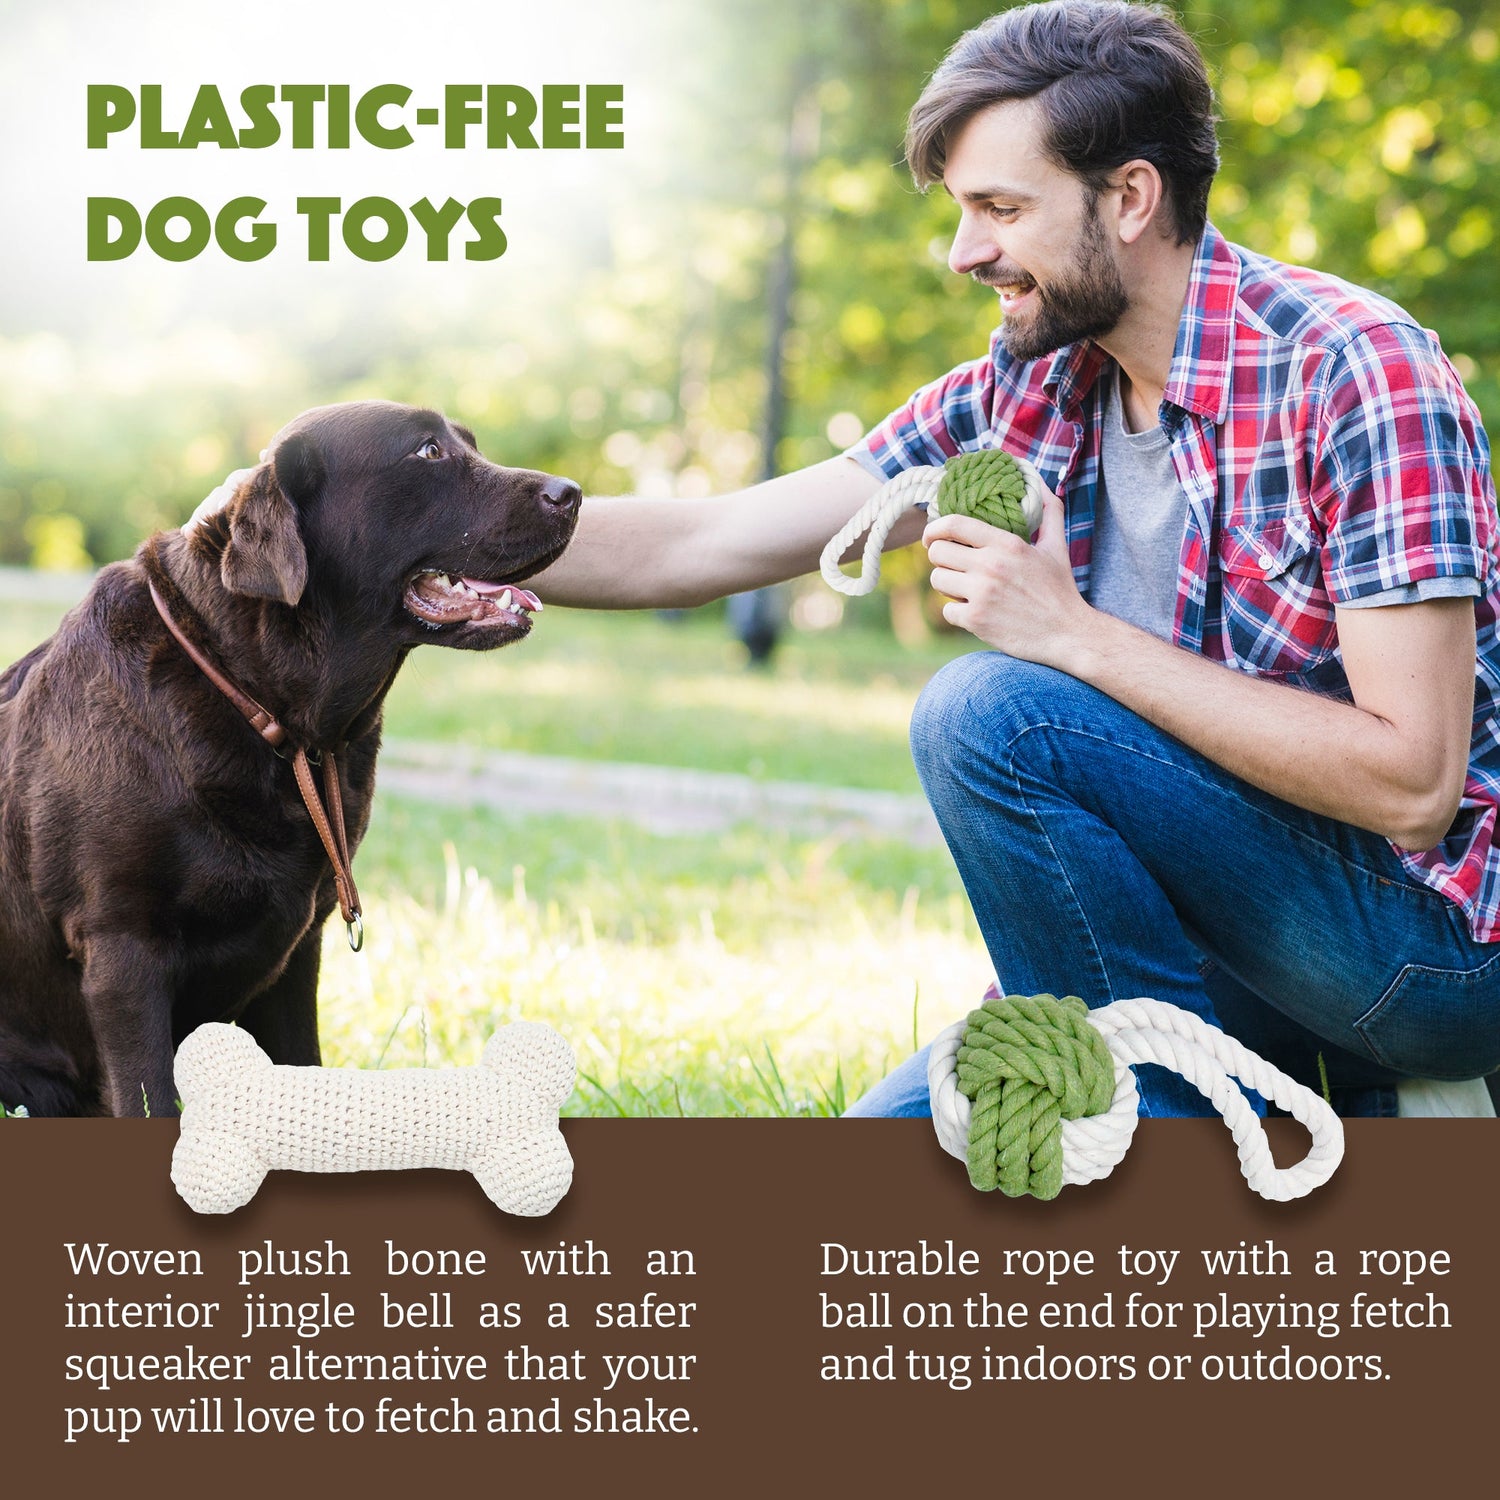 Eco-Friendly Dog Essentials Gift Box